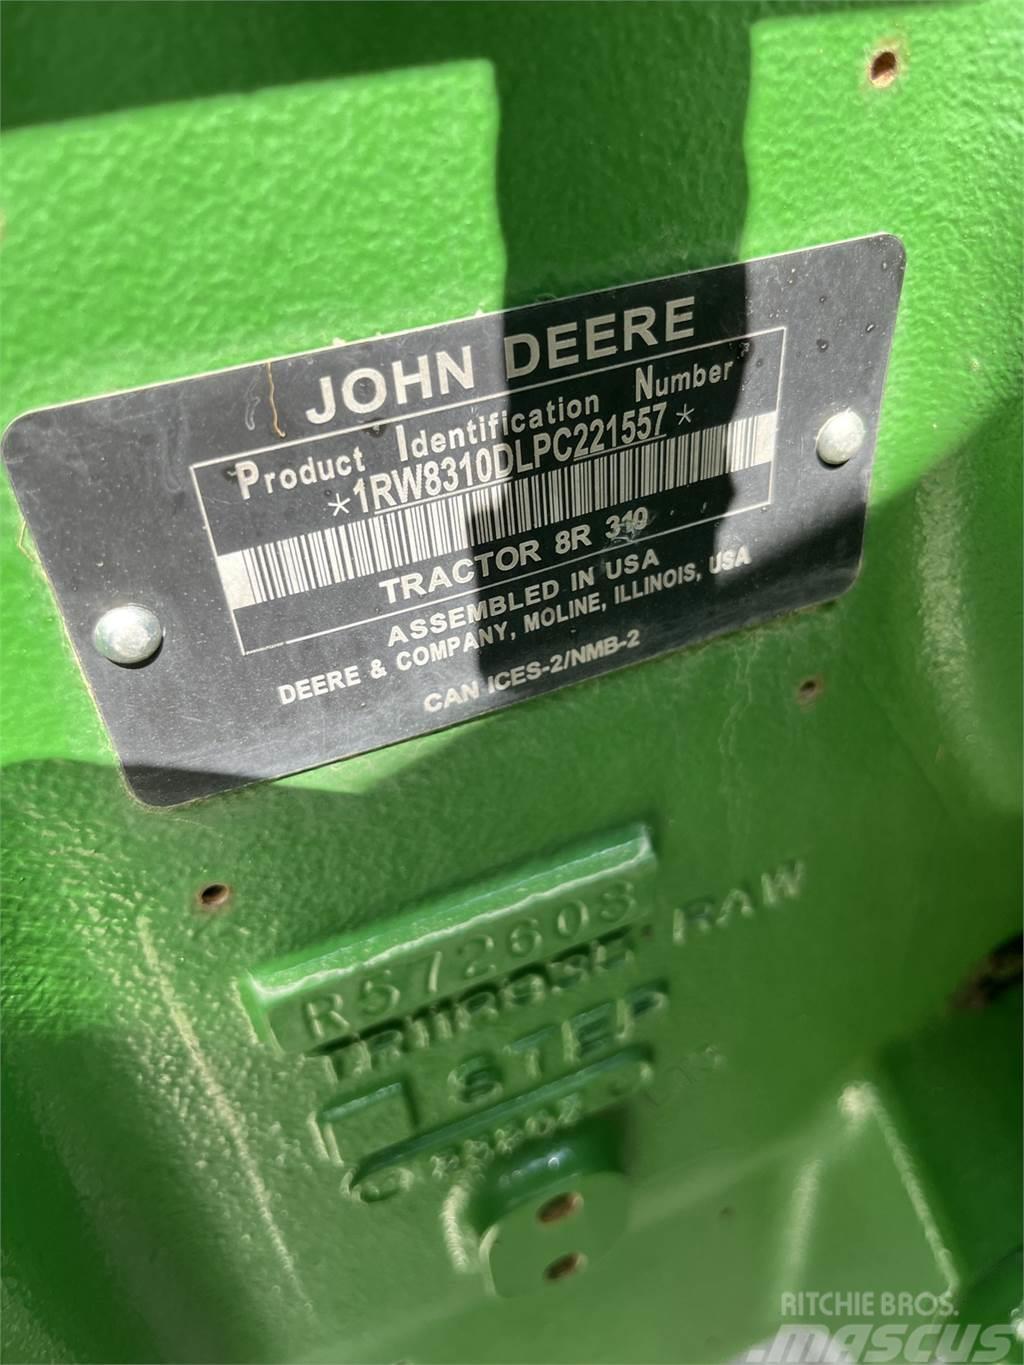 John Deere 8R 310 Трактори